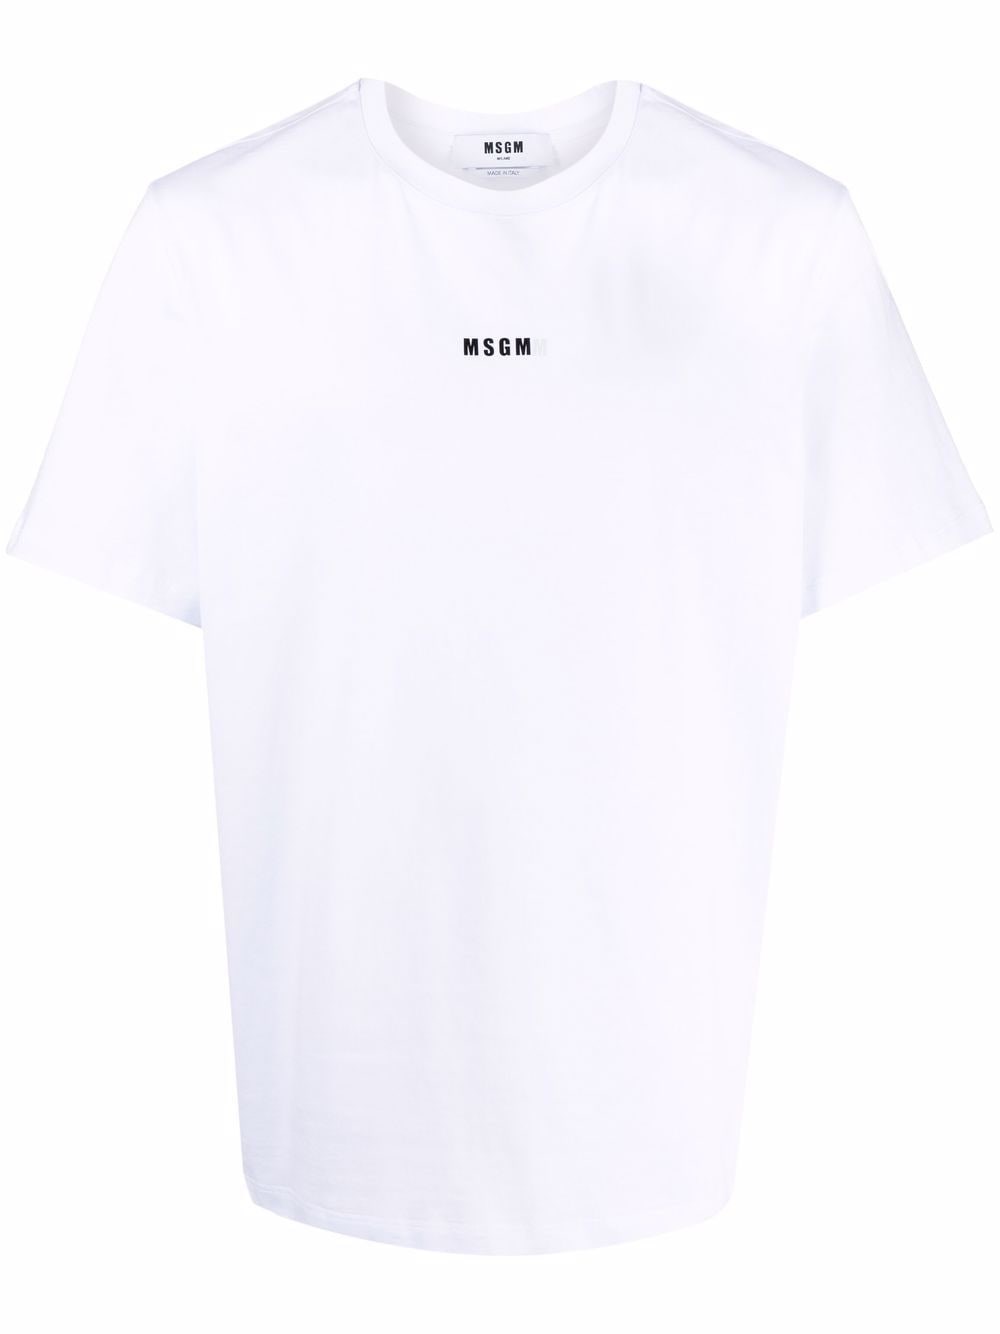 Msgm T-shirt Logo In White